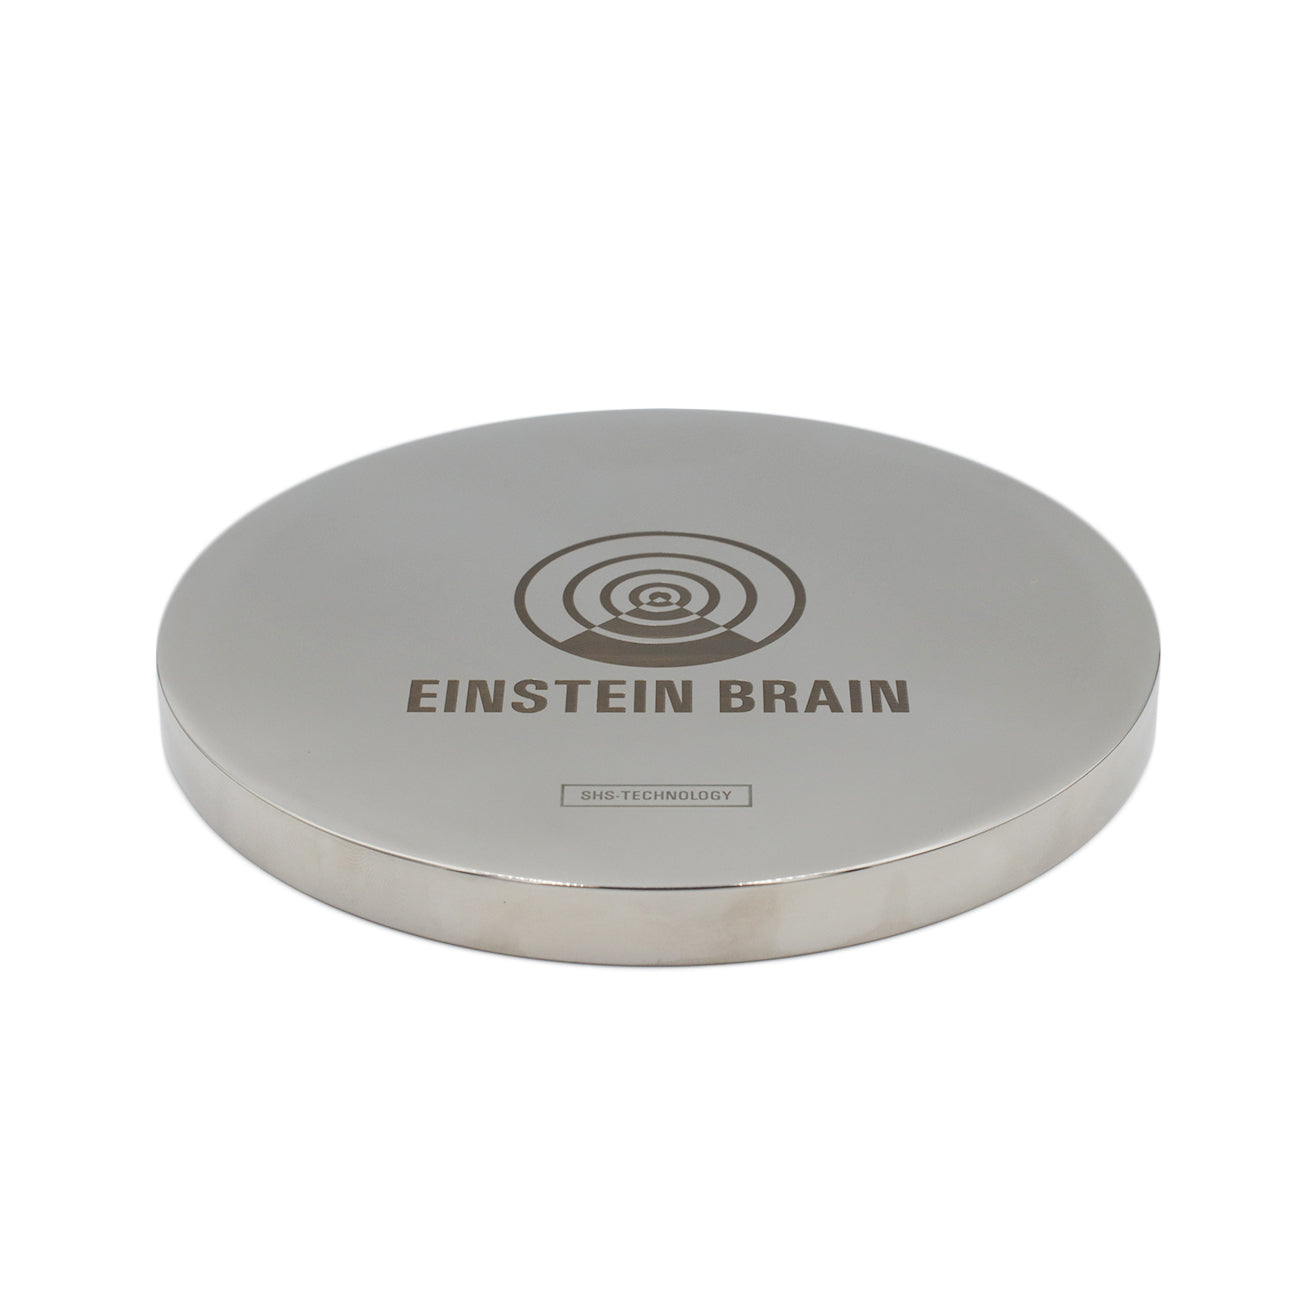 EMF Workstation Protection -  EMF Bed Protection - Einstein Brain Relax Chrome